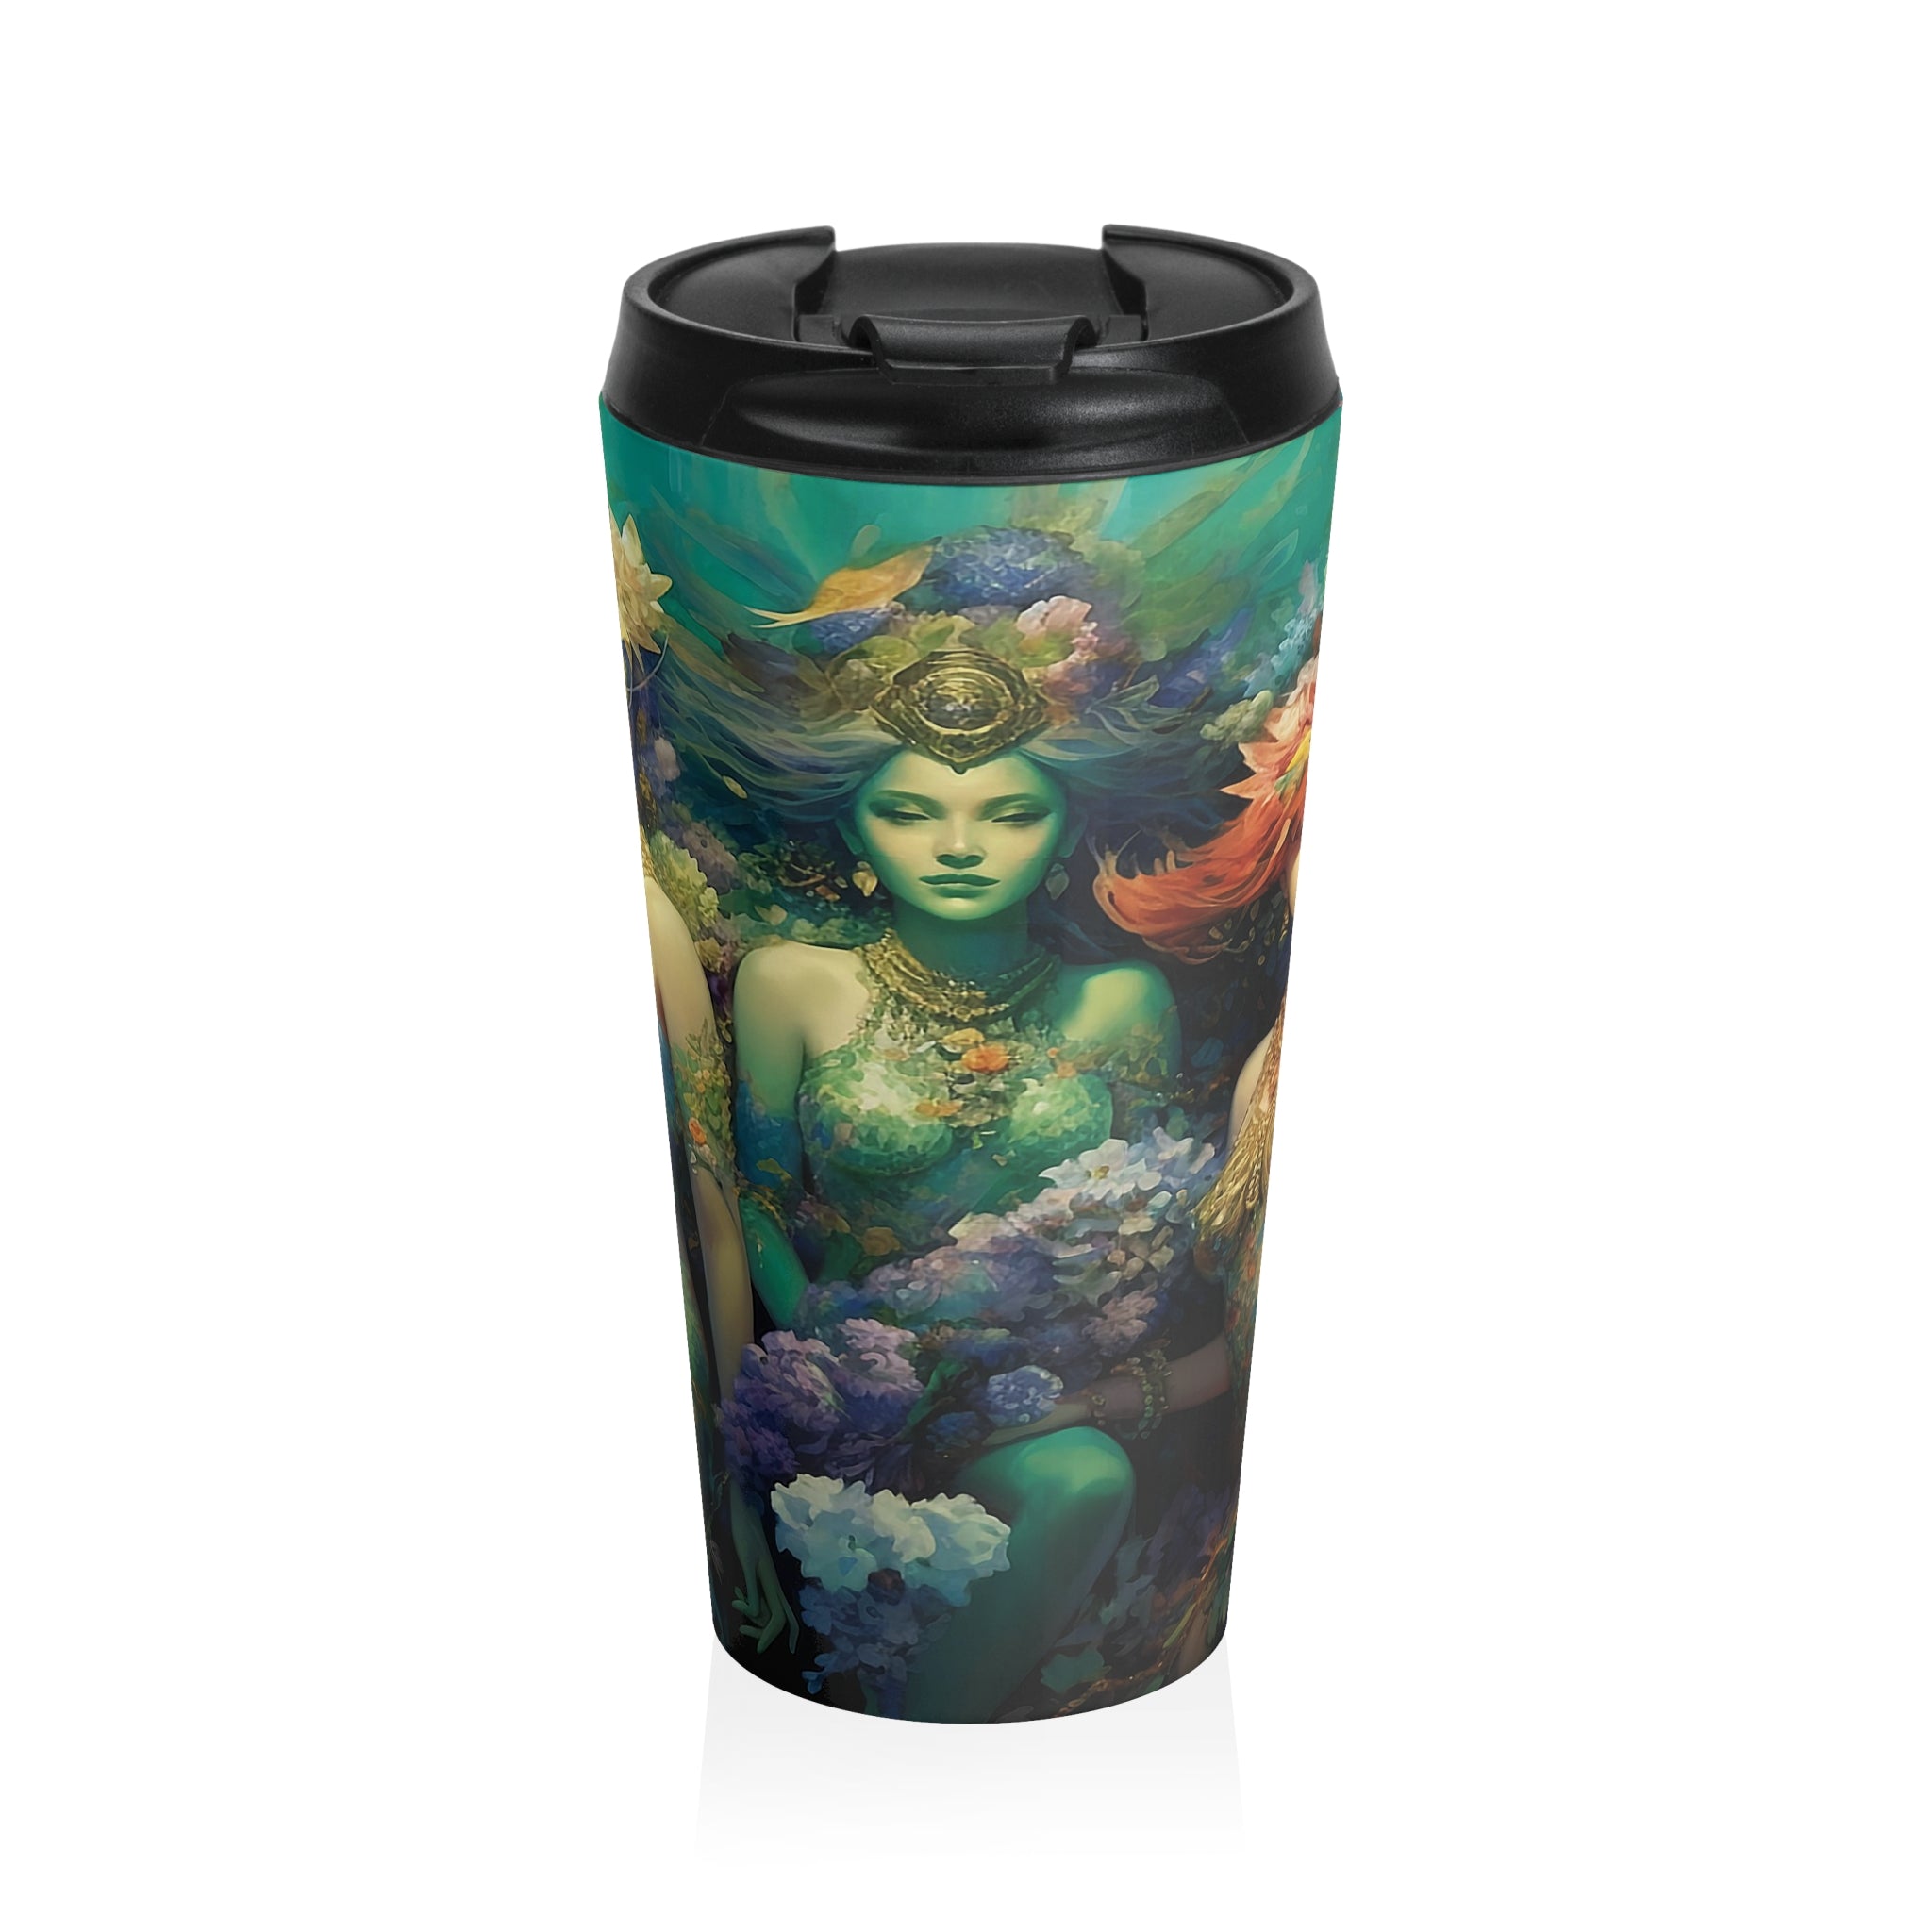 15 oz Stainless Steel Tumbler with 3 Dreamy Water Goddesses Design Travel Mug